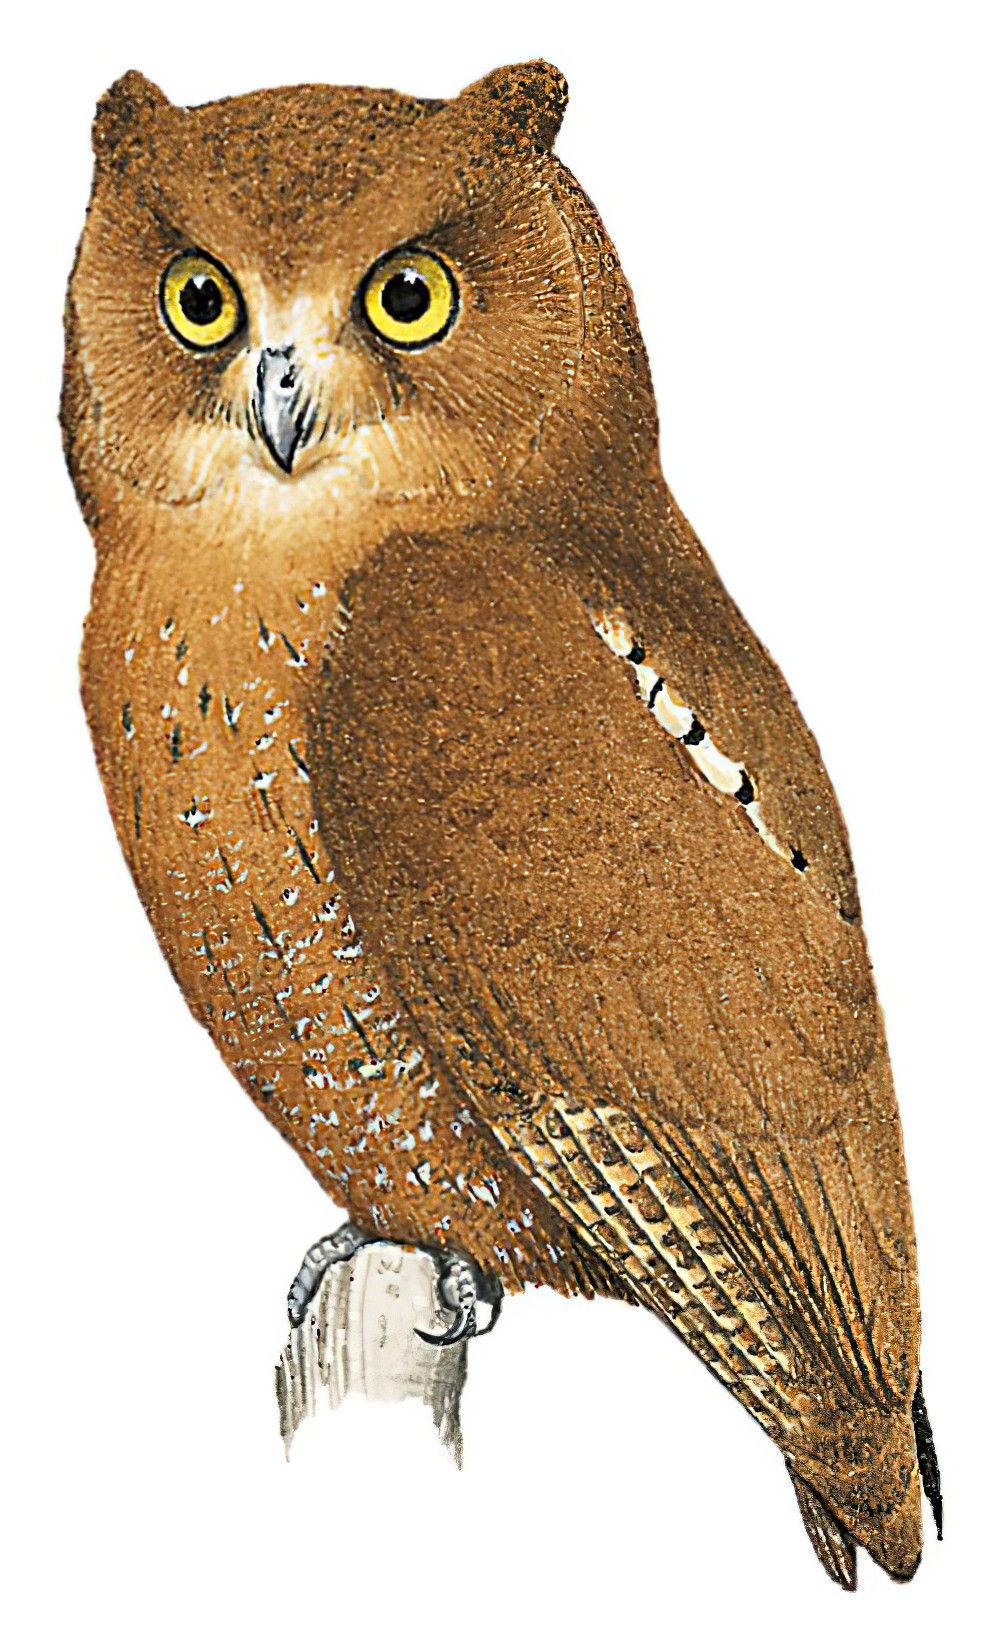 栗角鸮 / Simeulue Scops Owl / Otus umbra